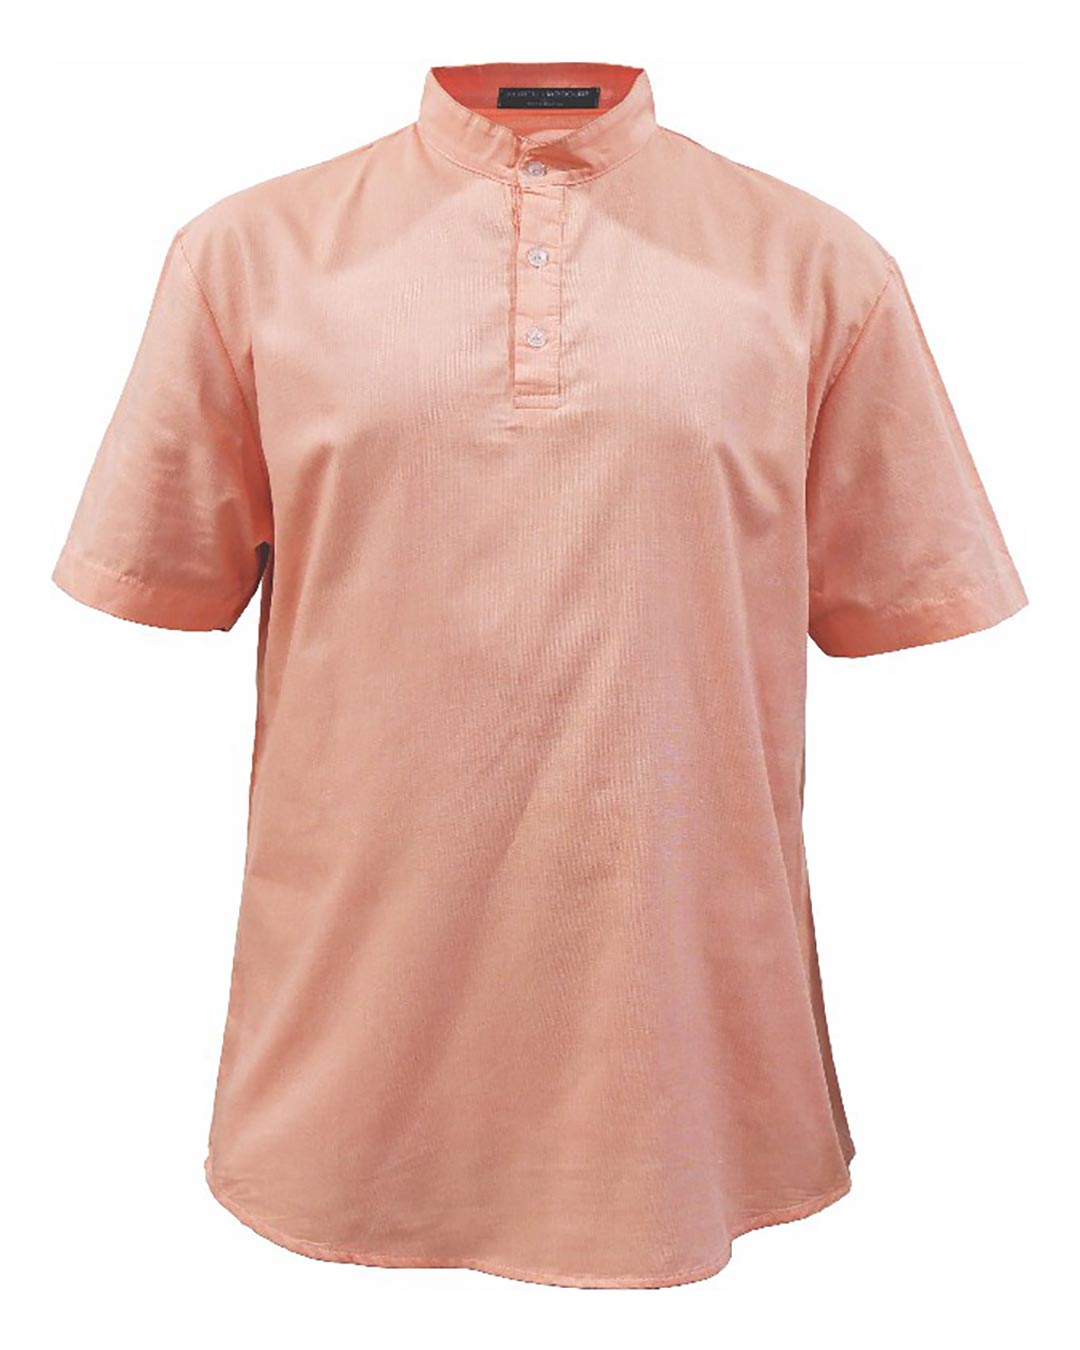 north harbour charm shirts nhb 3400 short sleeve